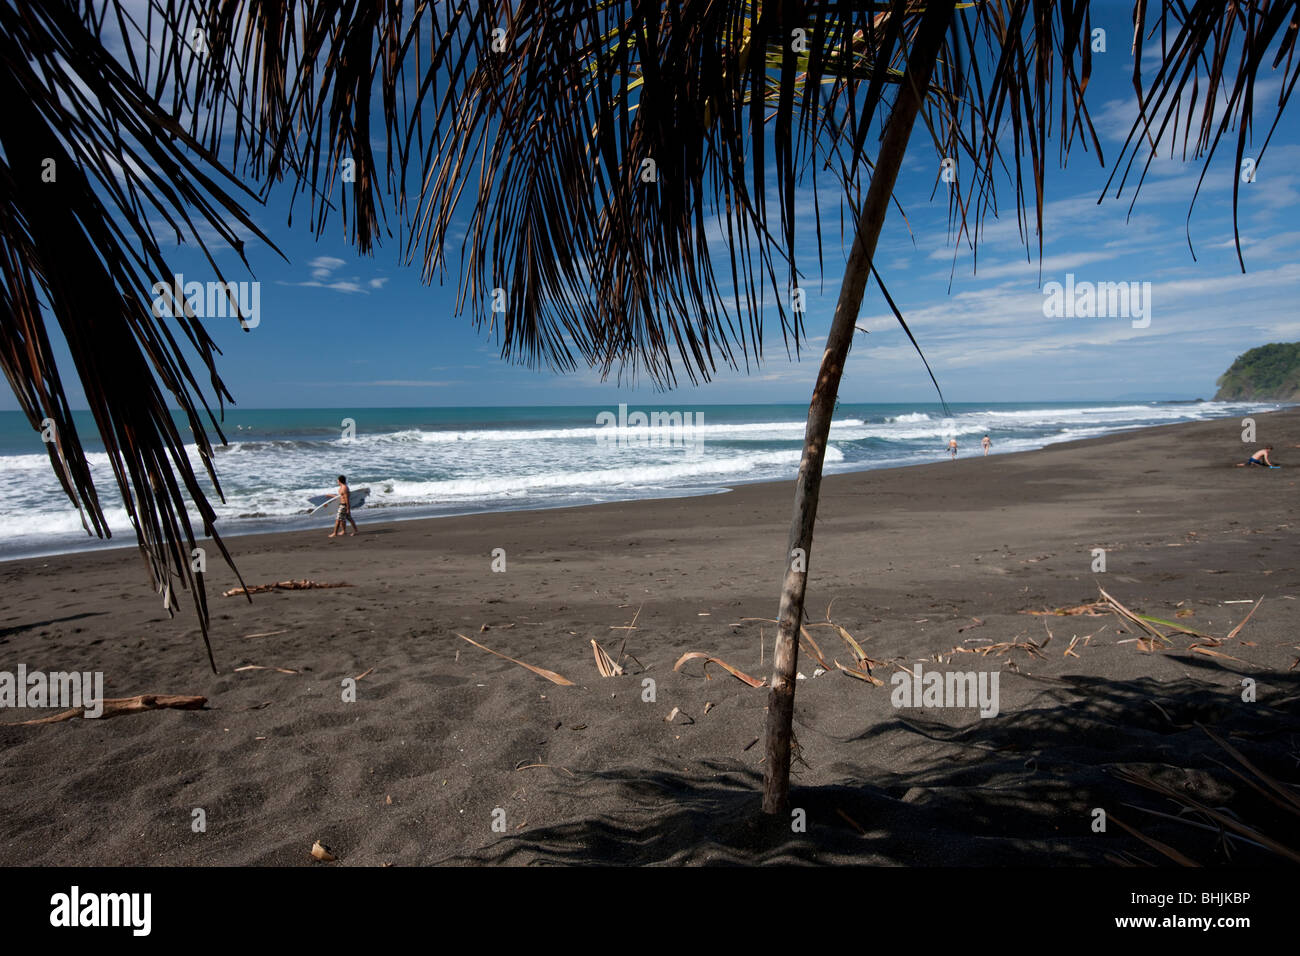 Playa Hermosa, Guanacaste, Costa Rica Banque D'Images